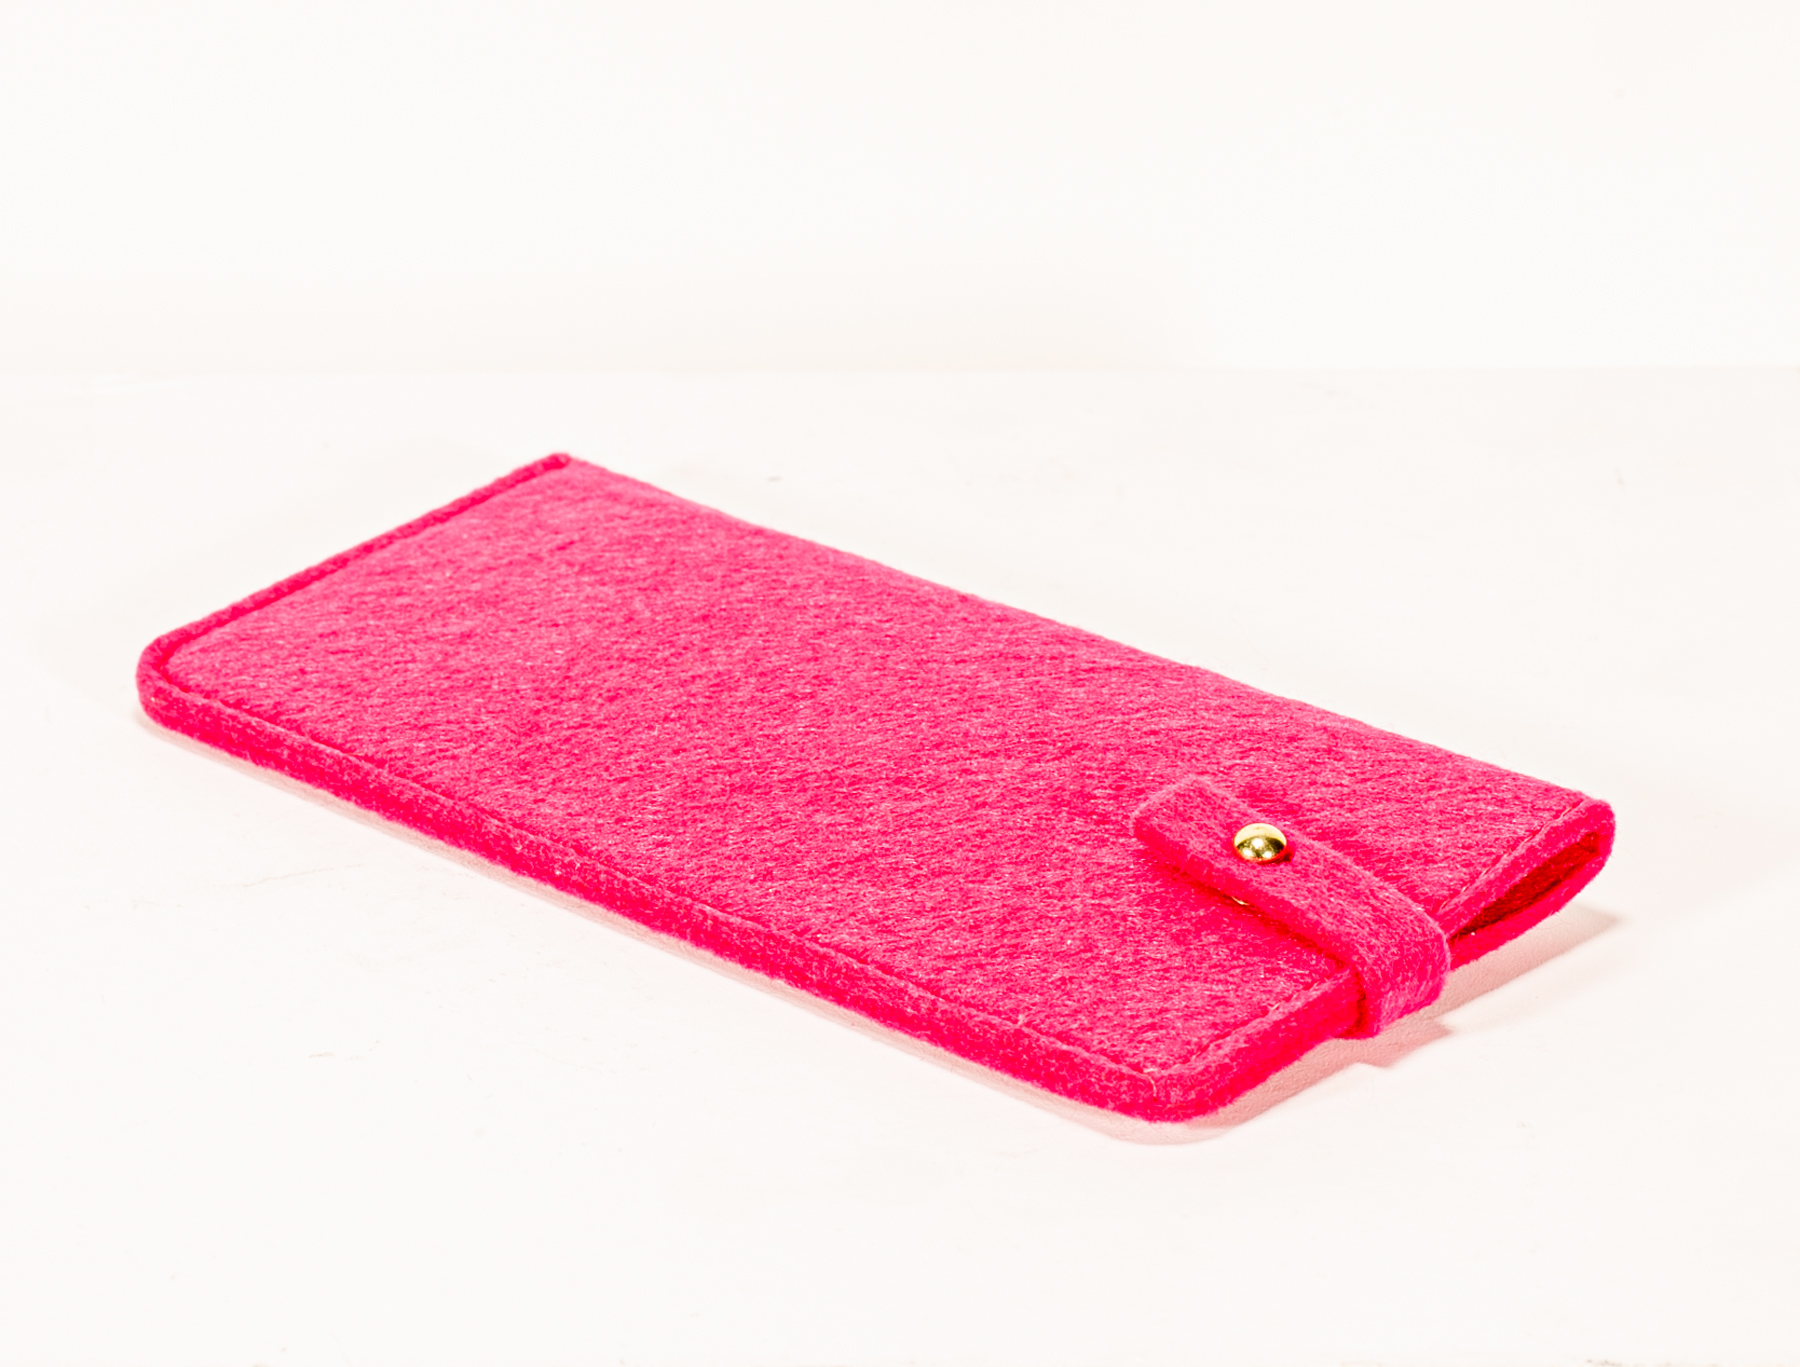 A pink felt glasses leather case, pure handicrafts, exquisite